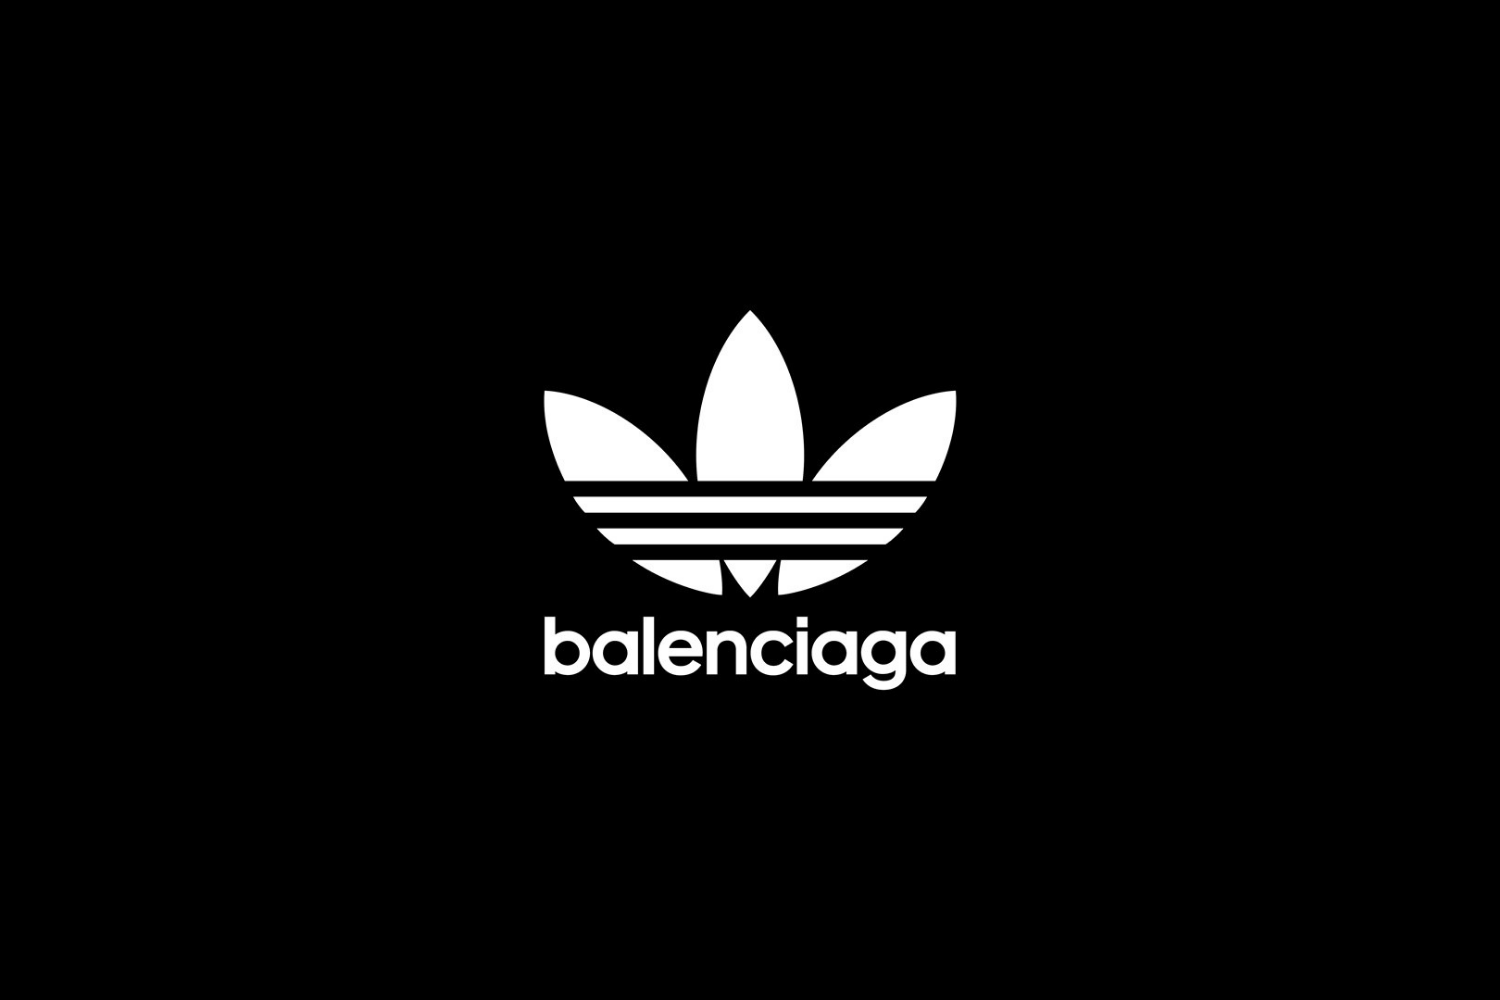 Balenciaga x adidas Originals collab is eindelijk officieel